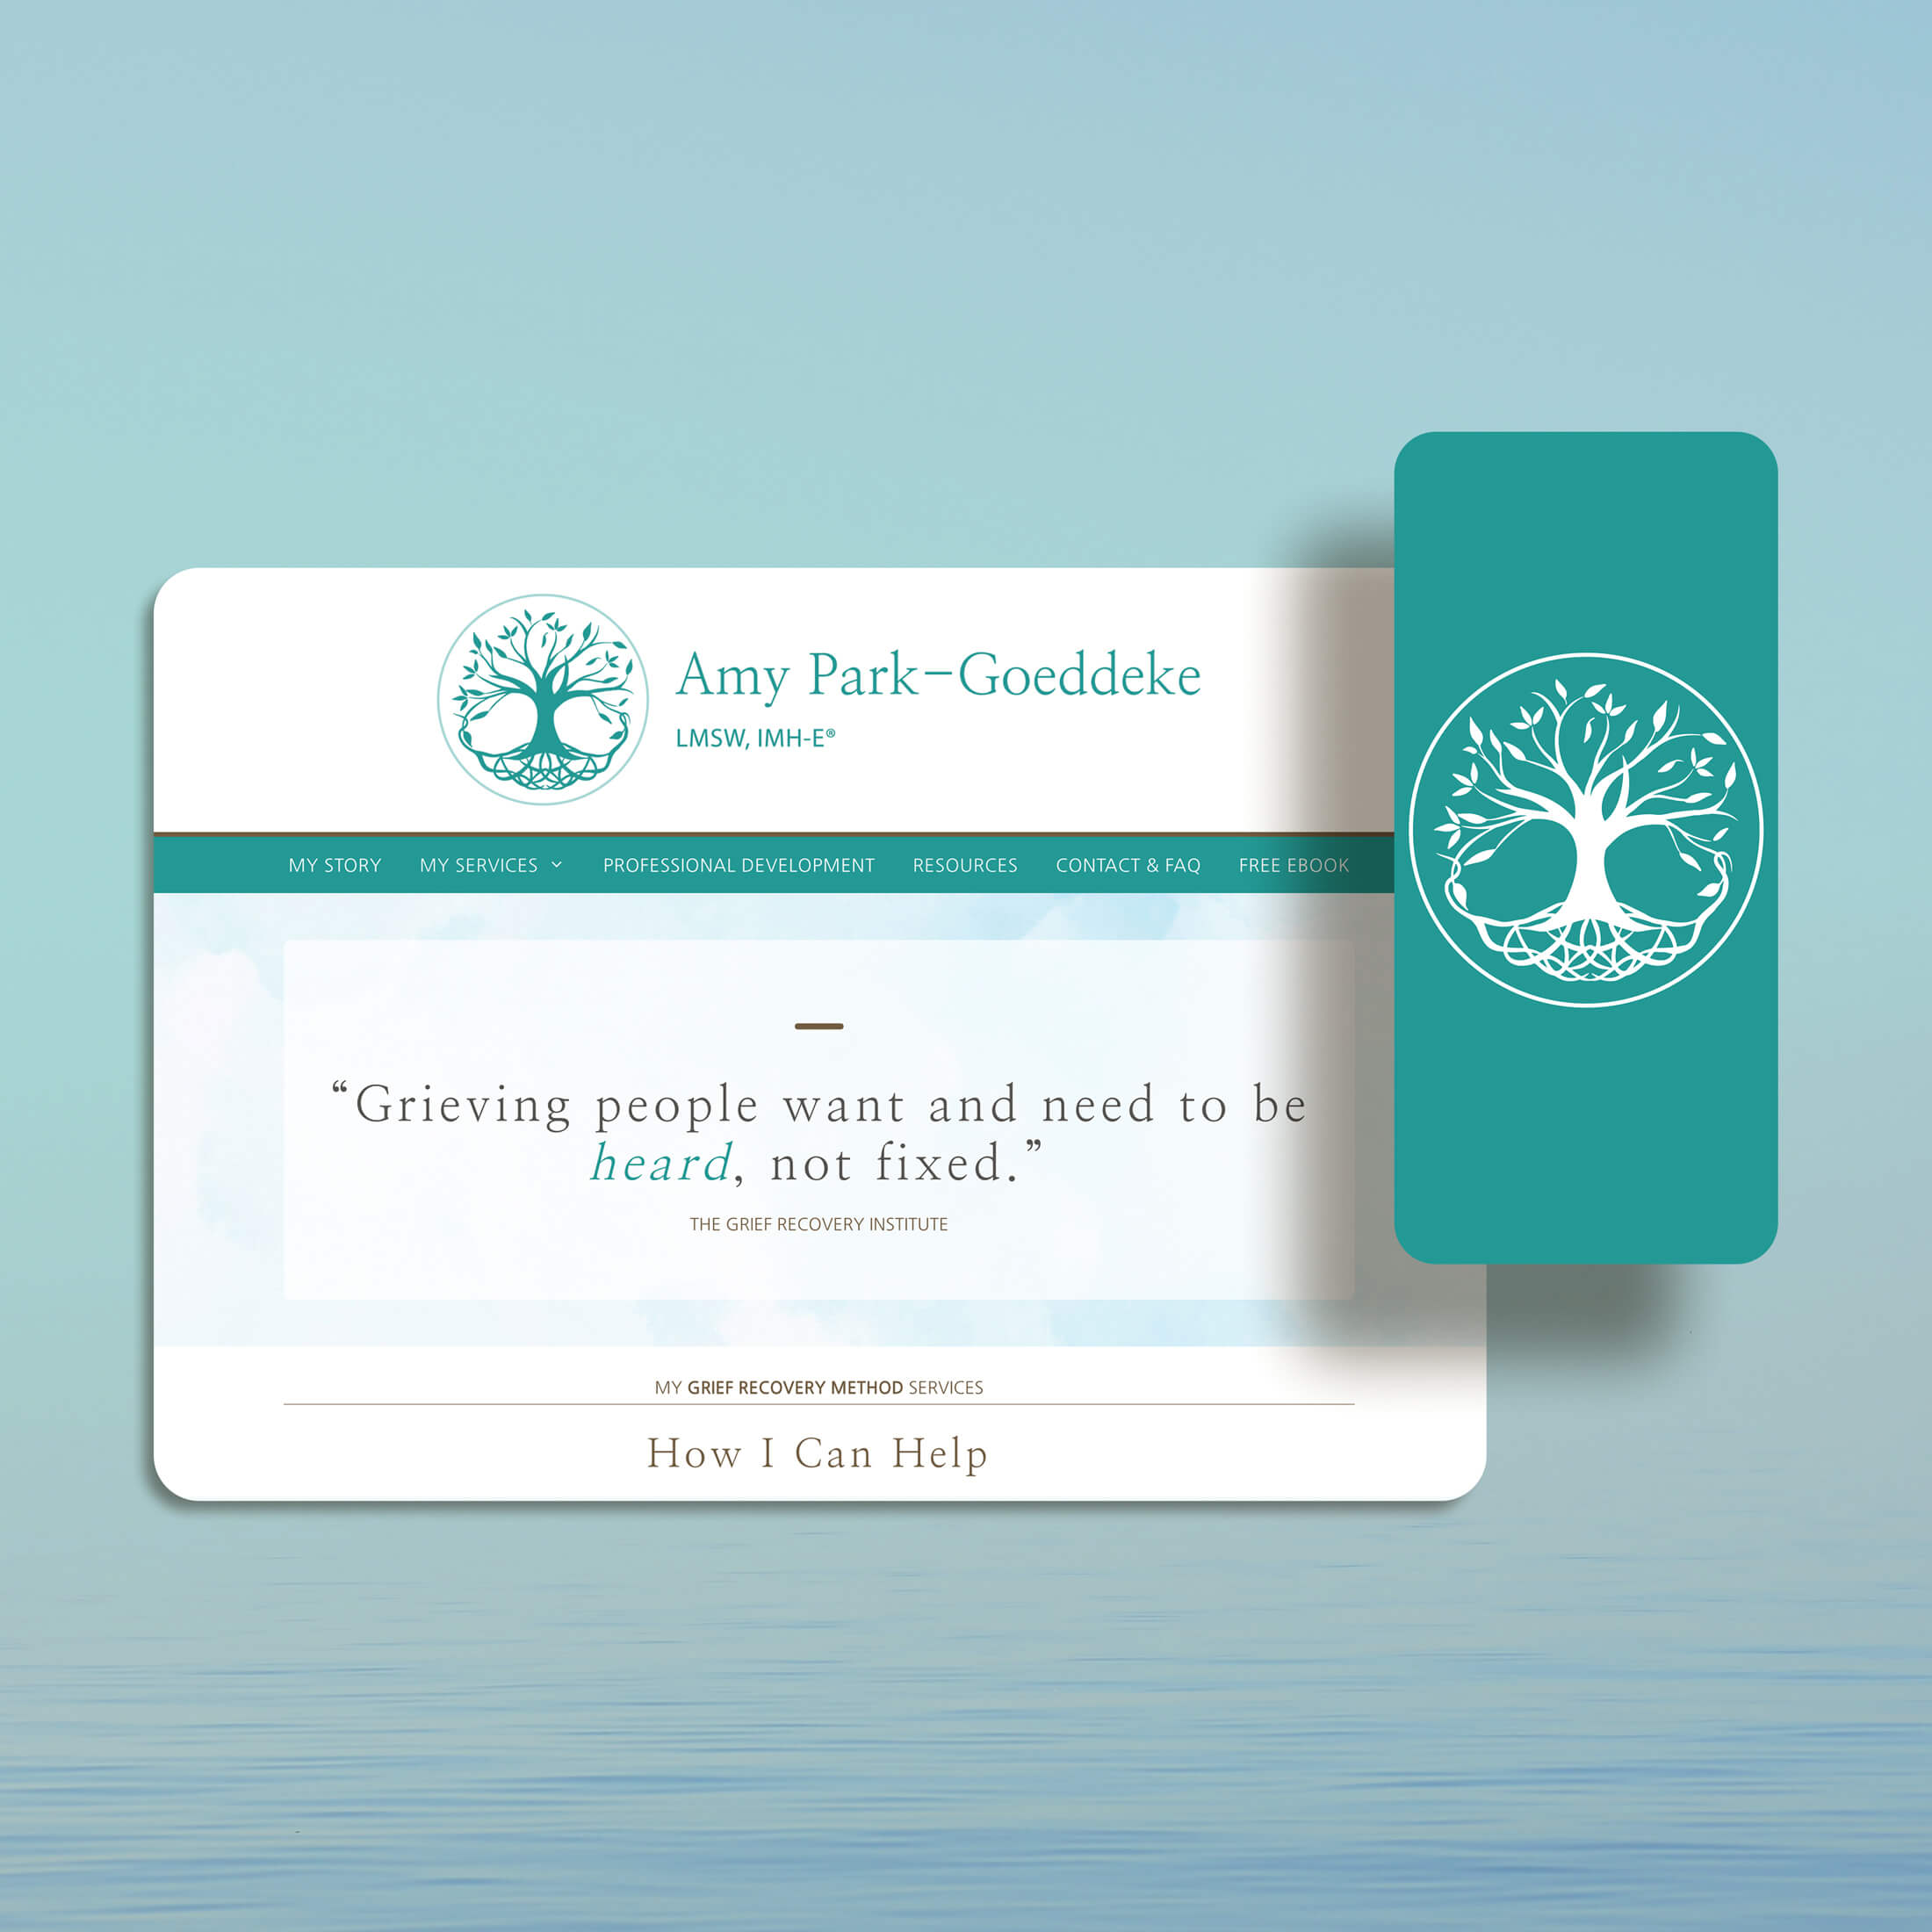 WordPress website design and visual identity design for Amy Park-Goeddeke by Tulip Tree Creative